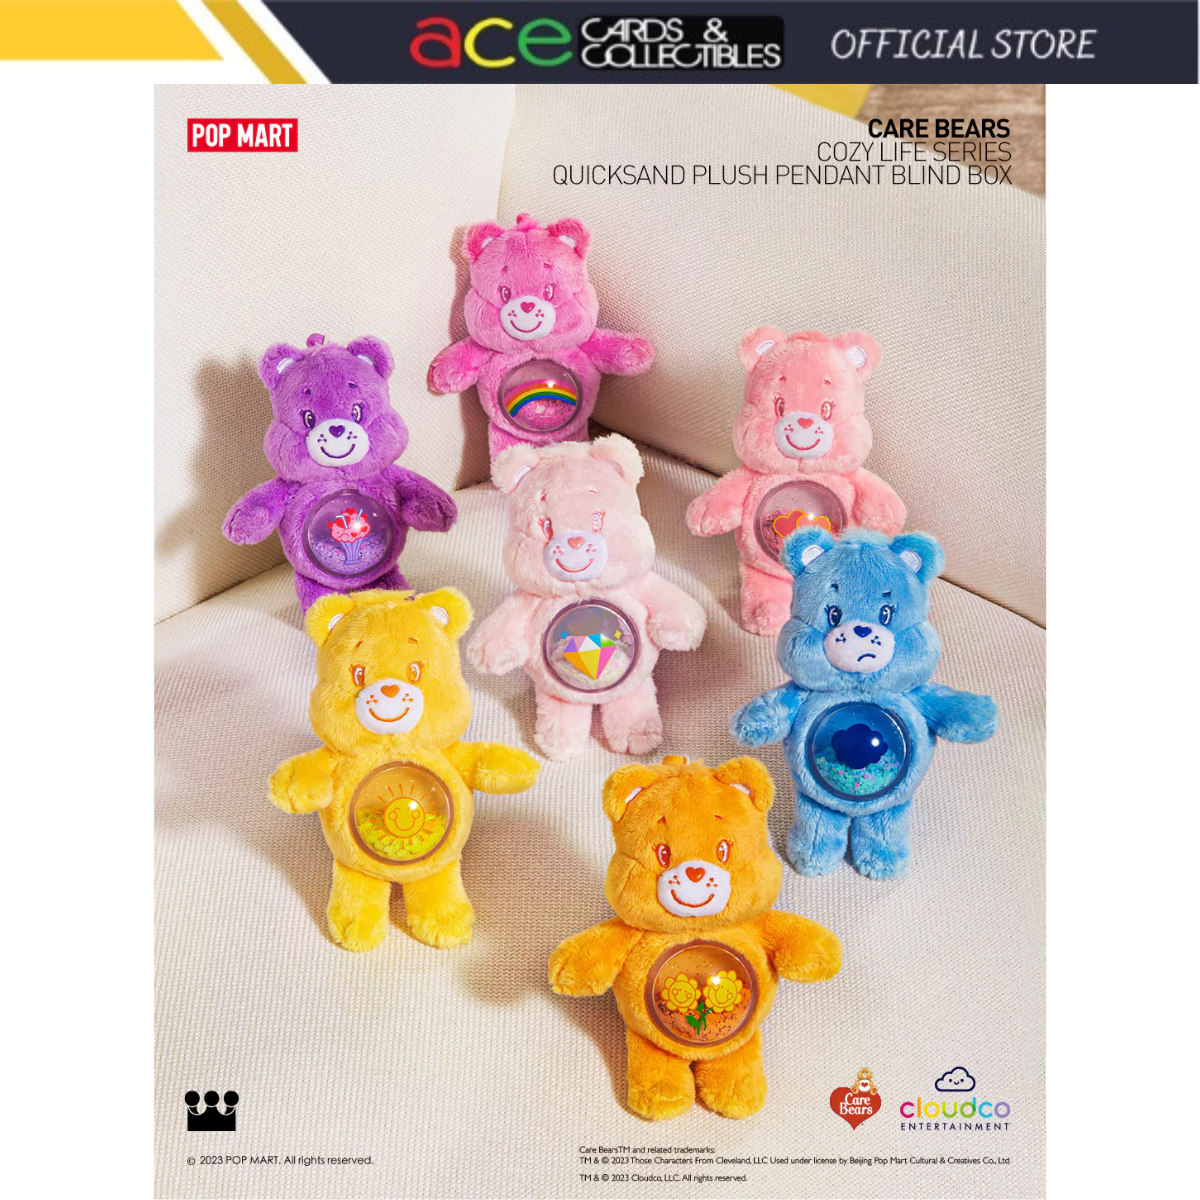 POP MART Care Bears Cozy Life Series "Quicksand Plush Pendant"-Single Box (Random)-Pop Mart-Ace Cards & Collectibles